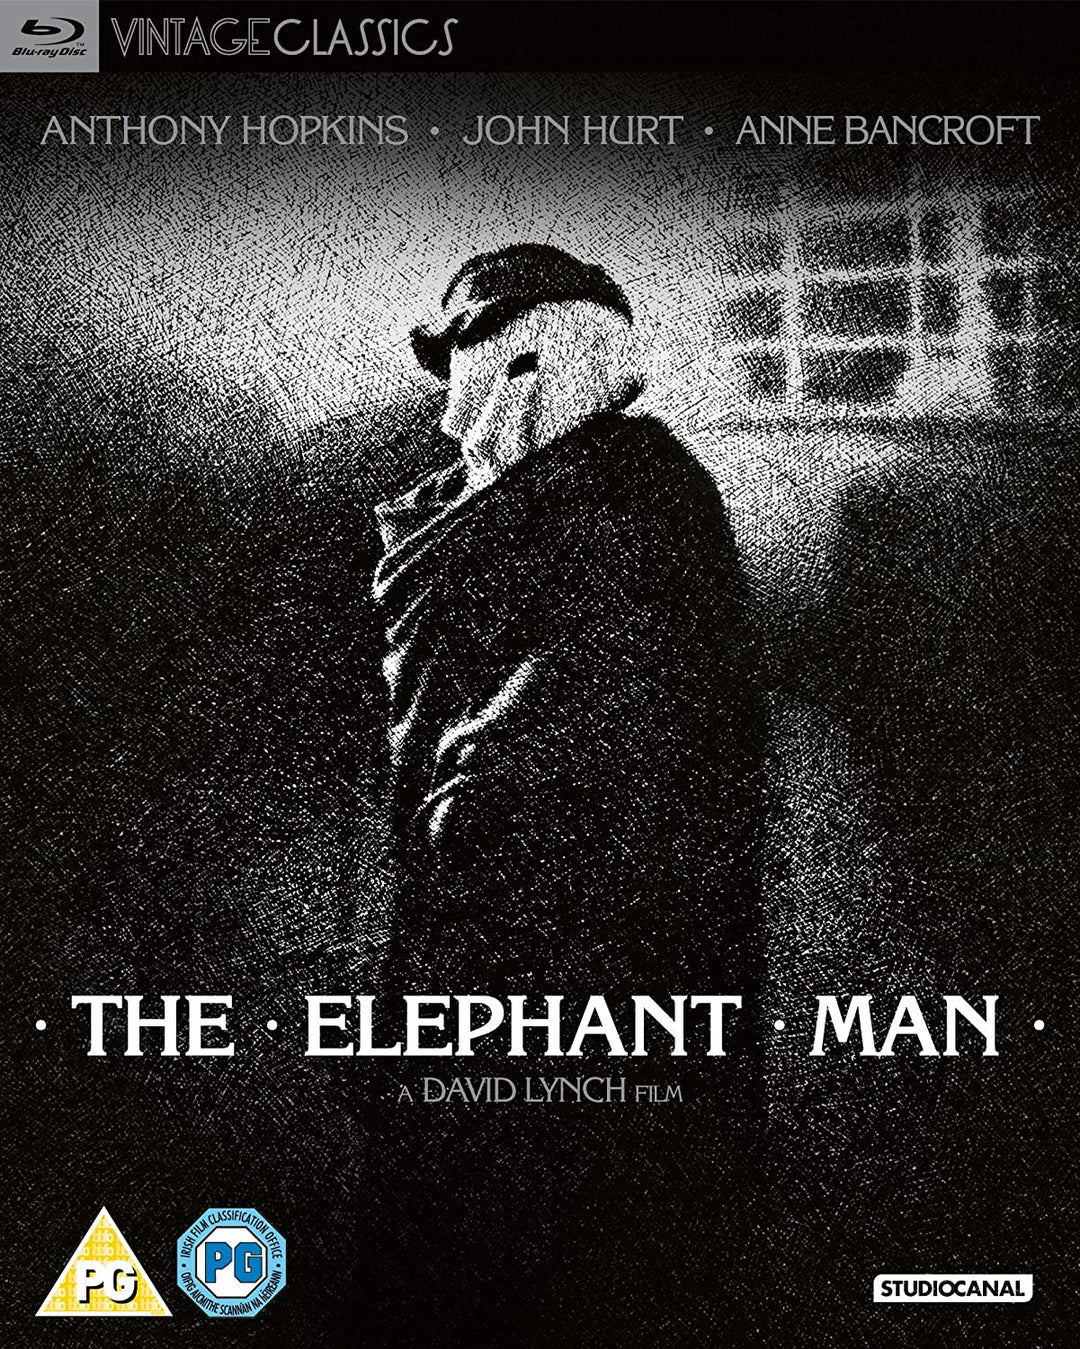 The Elephant Man [Blu-ray]